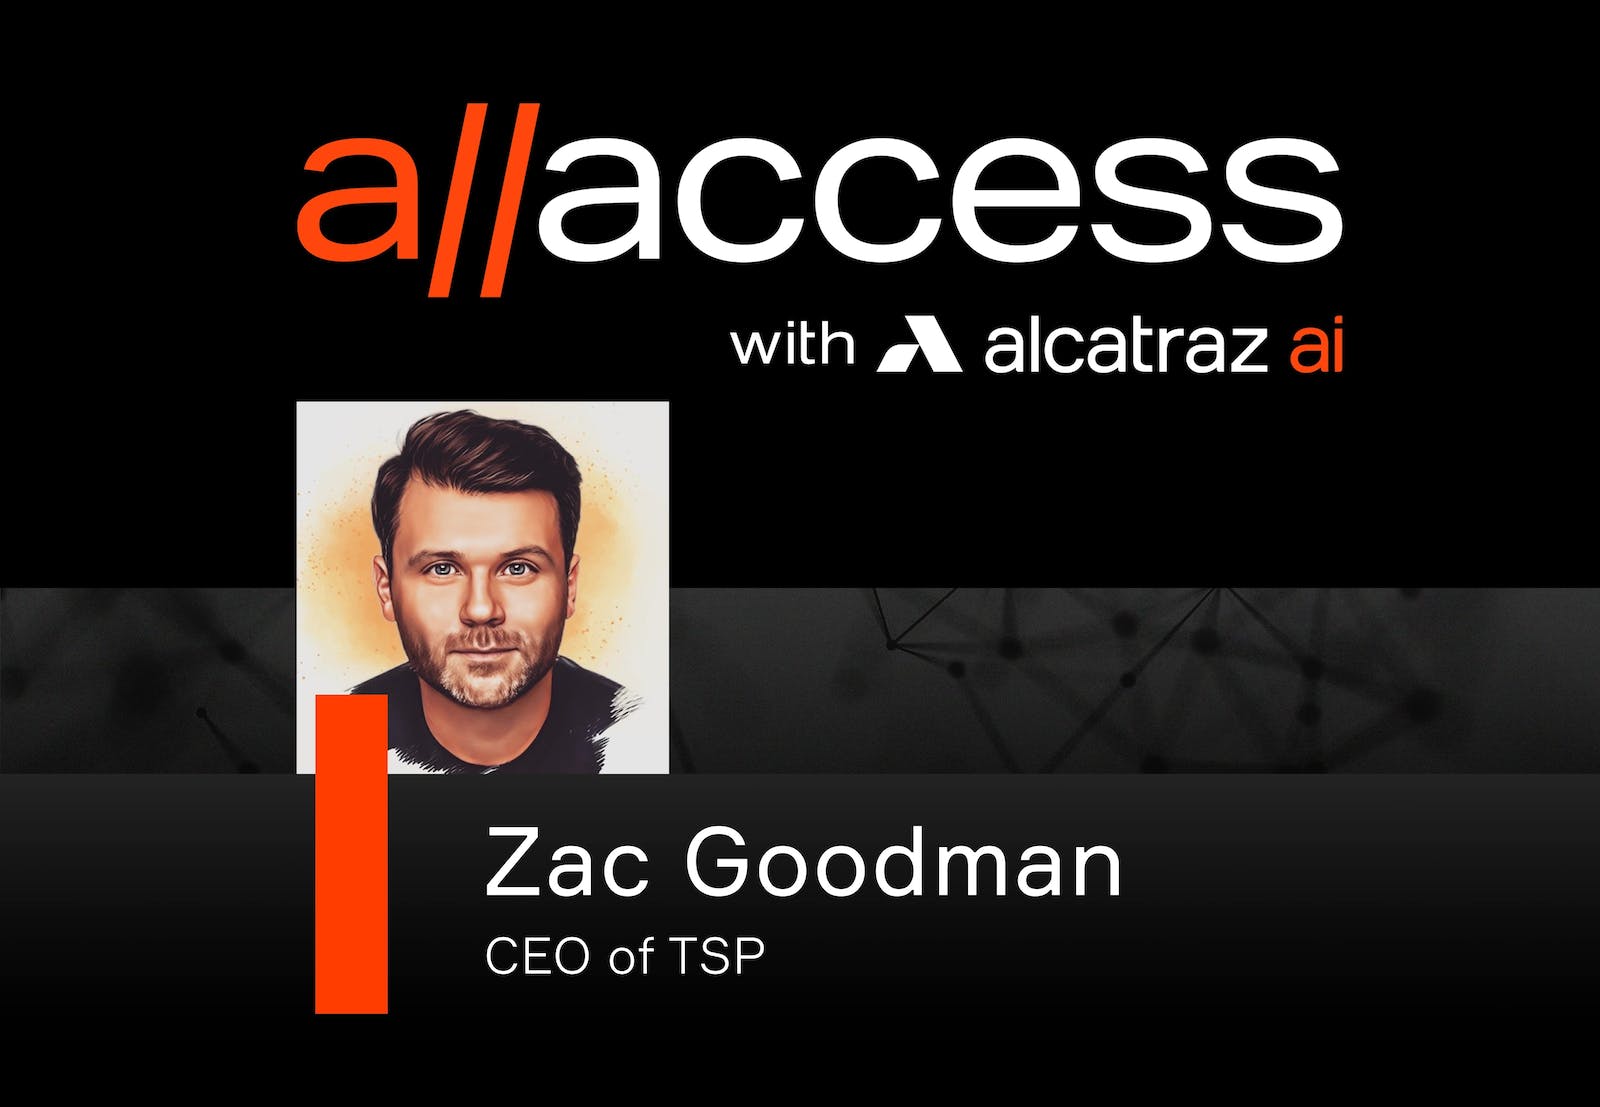 Zac Goodman CEO of TSP